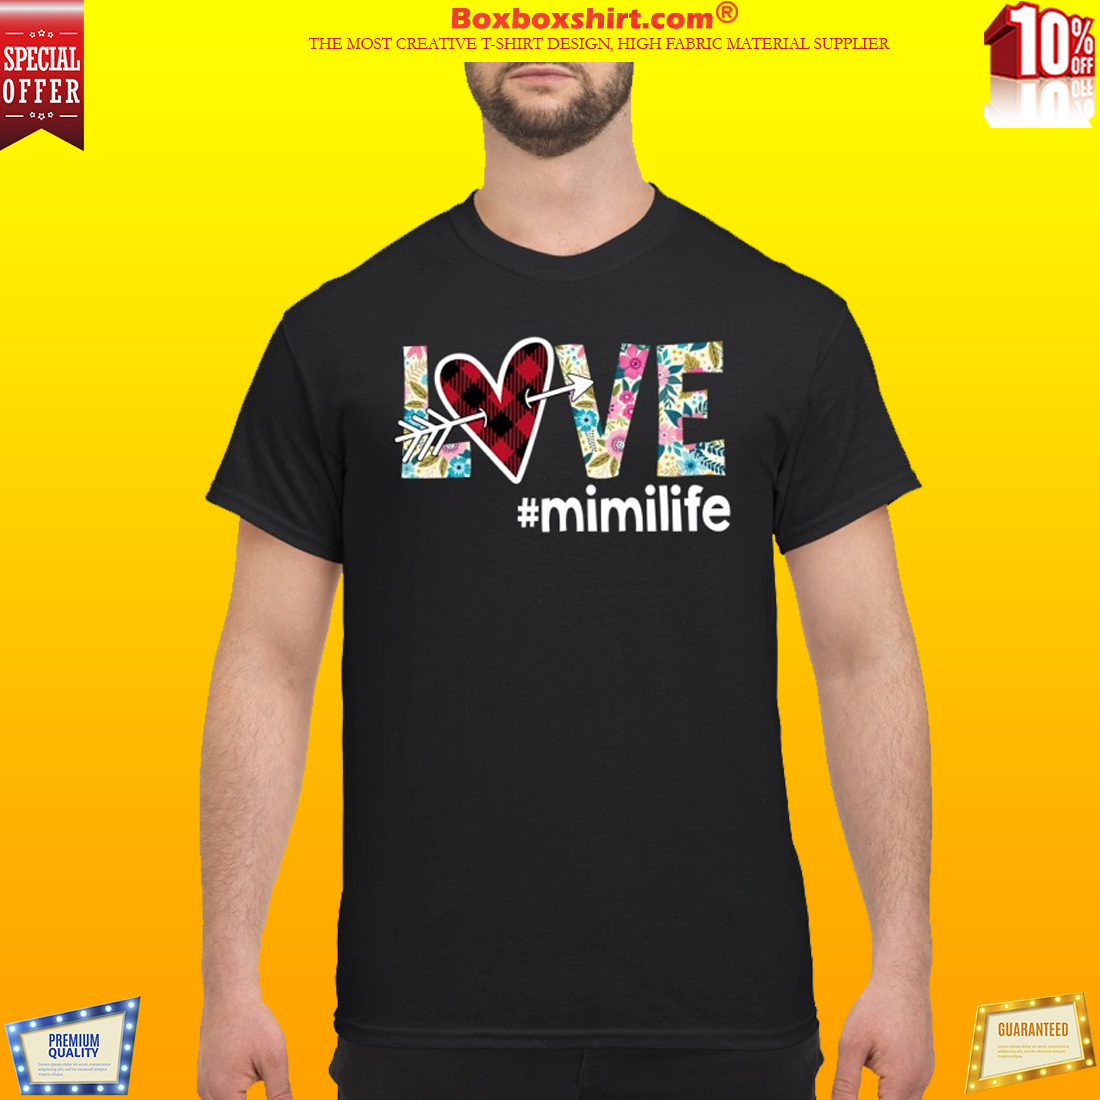 Love mimilife classic shirt